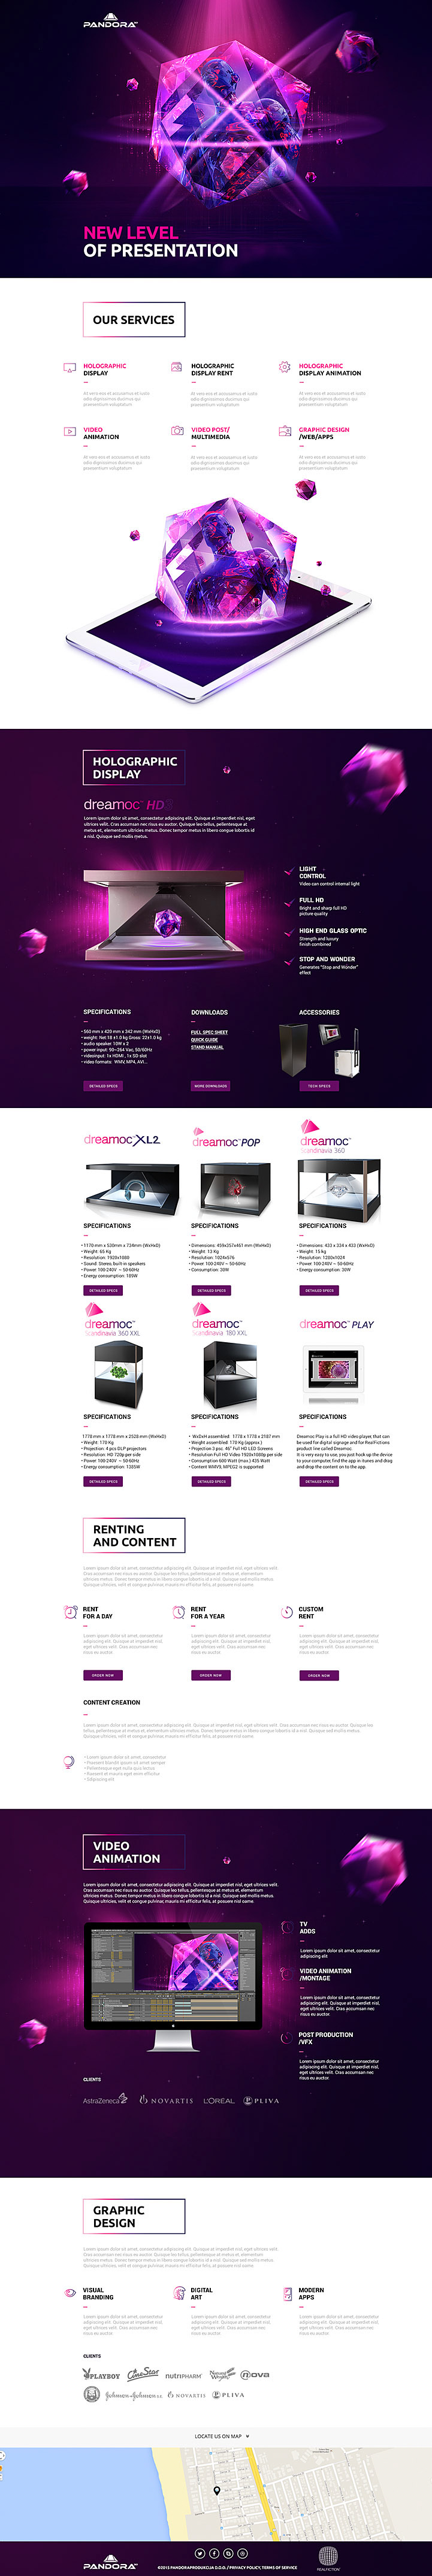 pandora purple futuristic holographic Display hologram stamp foil holo